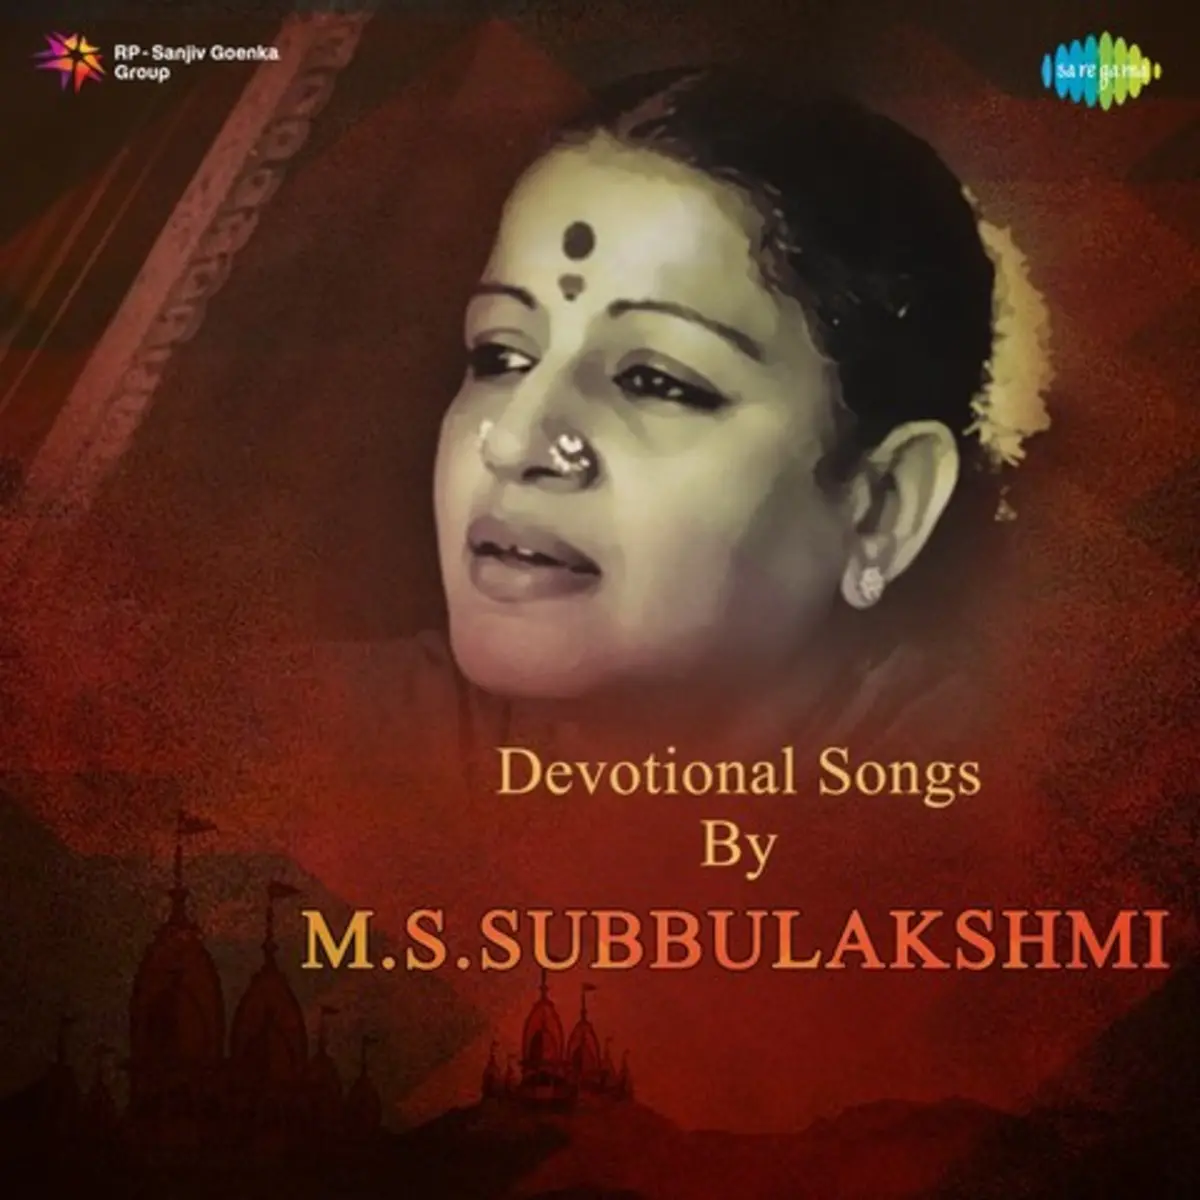 Tamil Devotional Songs By M S Subbulakshmi Songs Download Tamil Devotional Songs By M S Subbulakshmi Mp3 Tamil Songs Online Free On Gaana Com